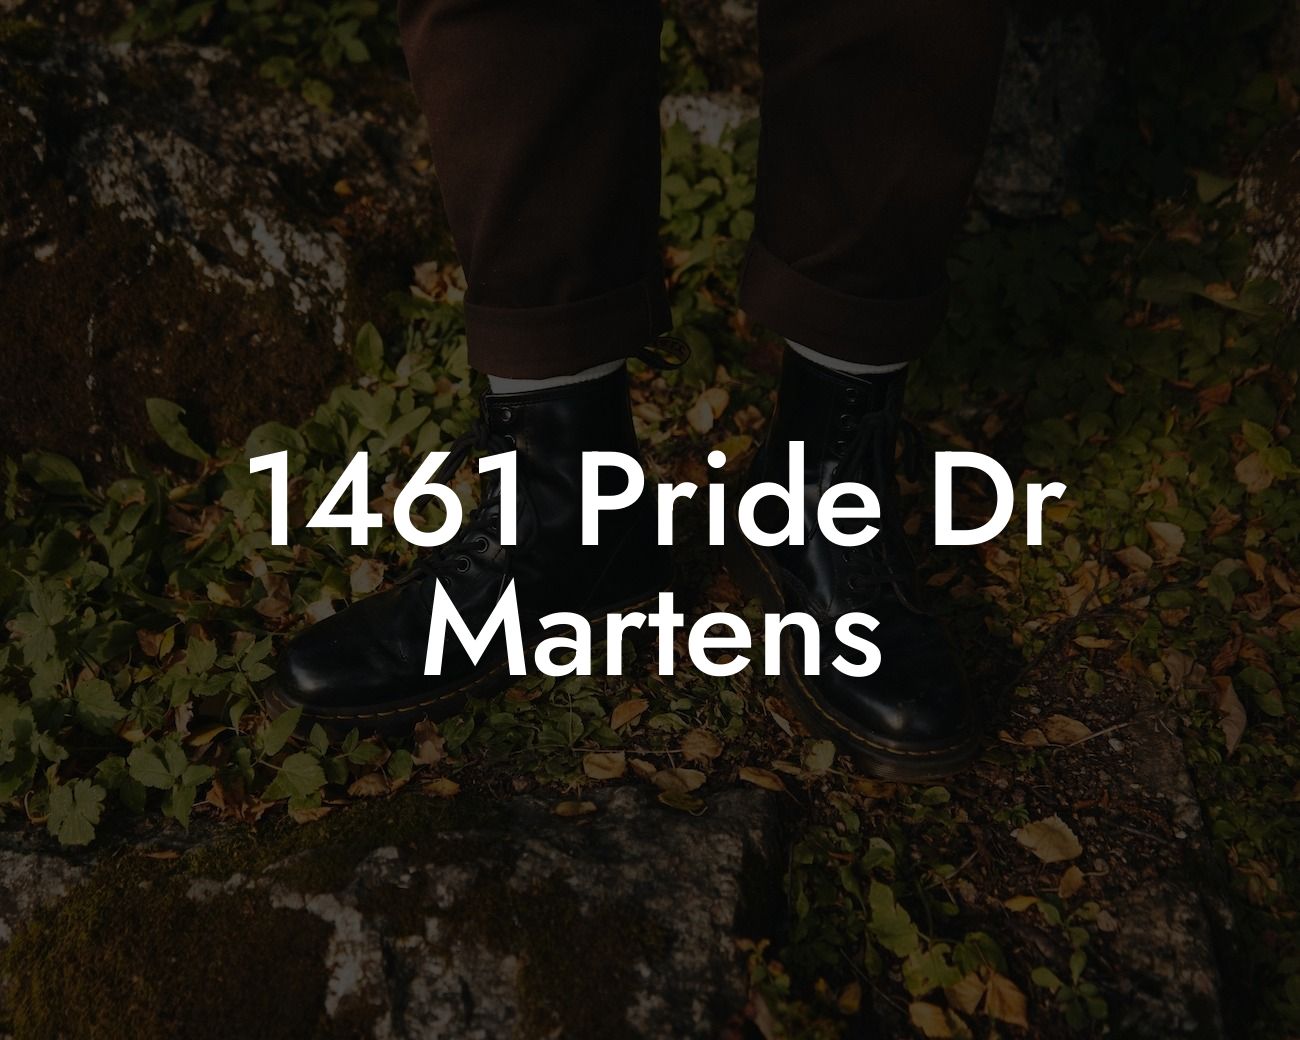 1461 Pride Dr Martens